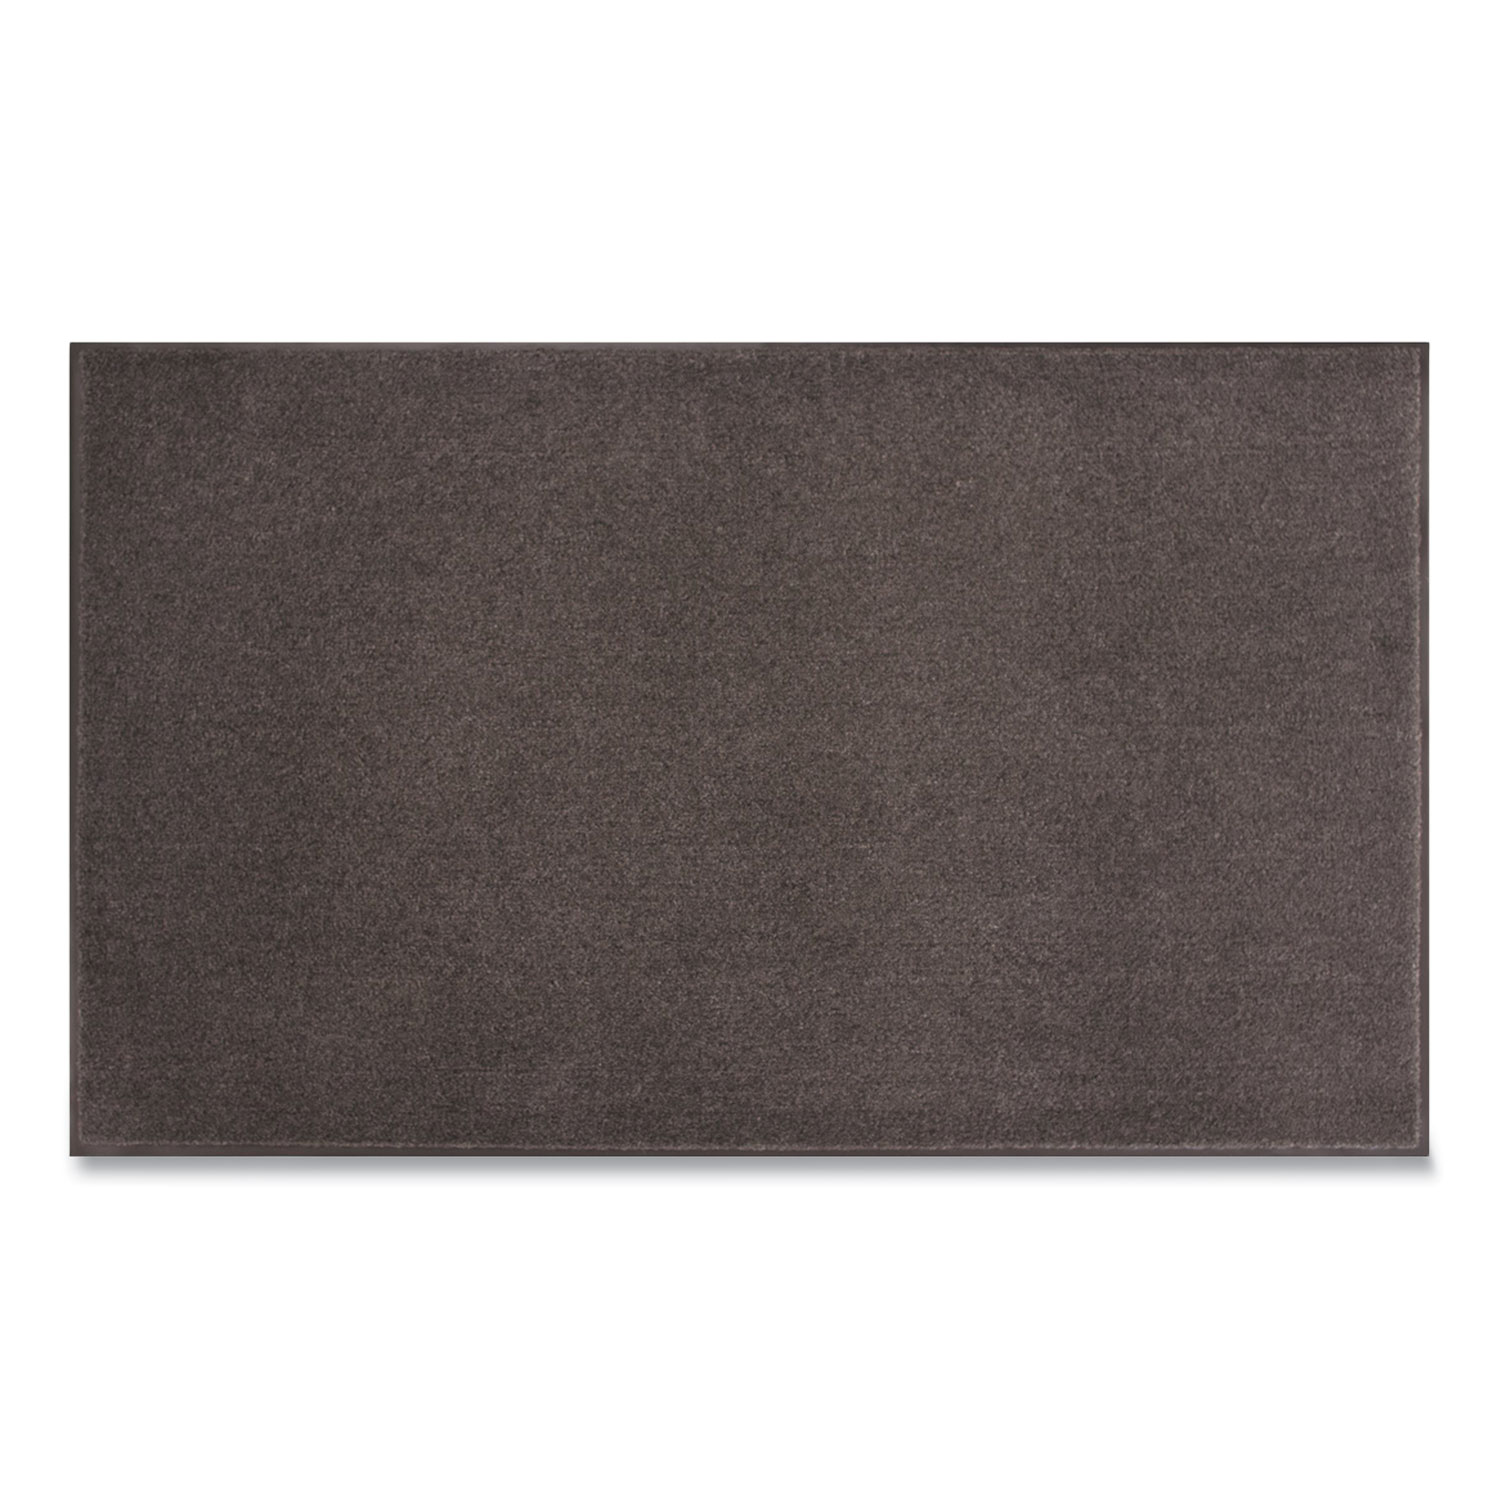 Apache Mills® Plush Tuff Entrance Mat, Rectangular, 36 x 48, Charcoal